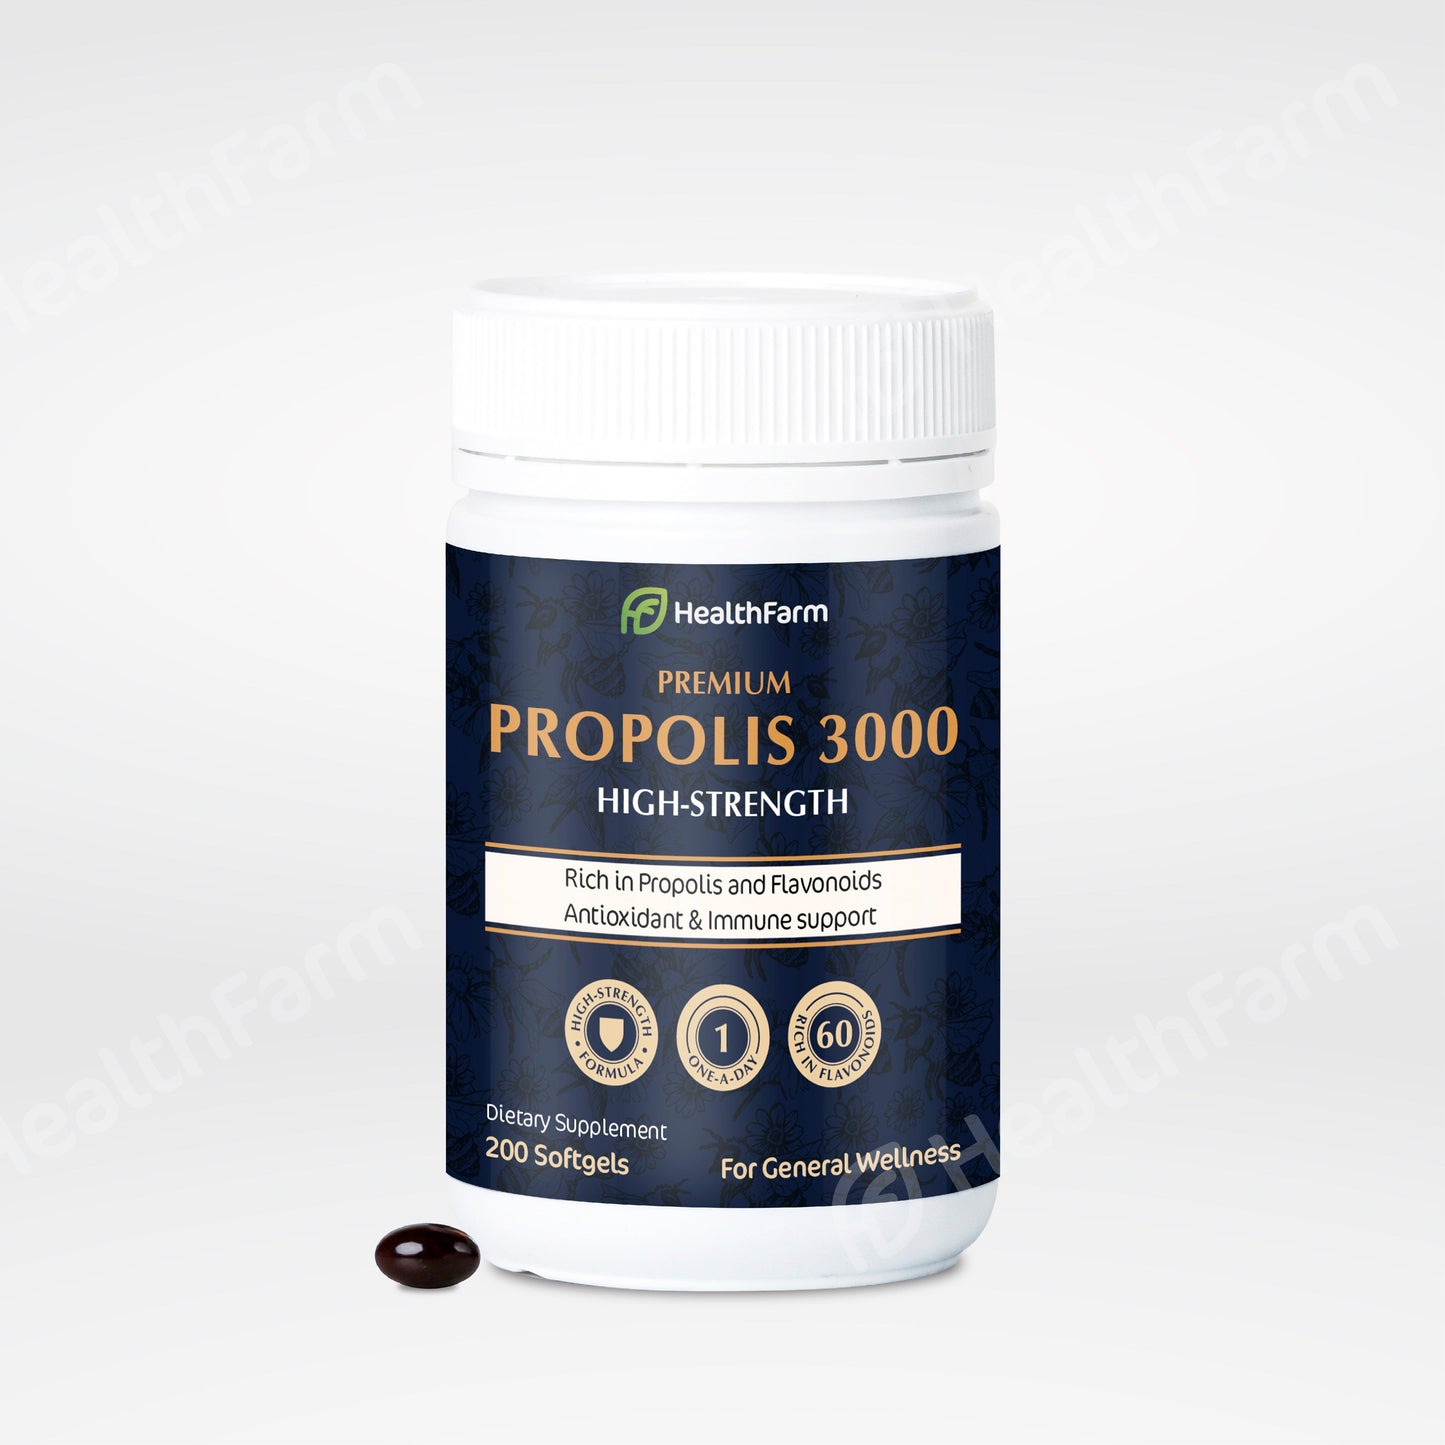 Premium Propolis 3000 High-Strength